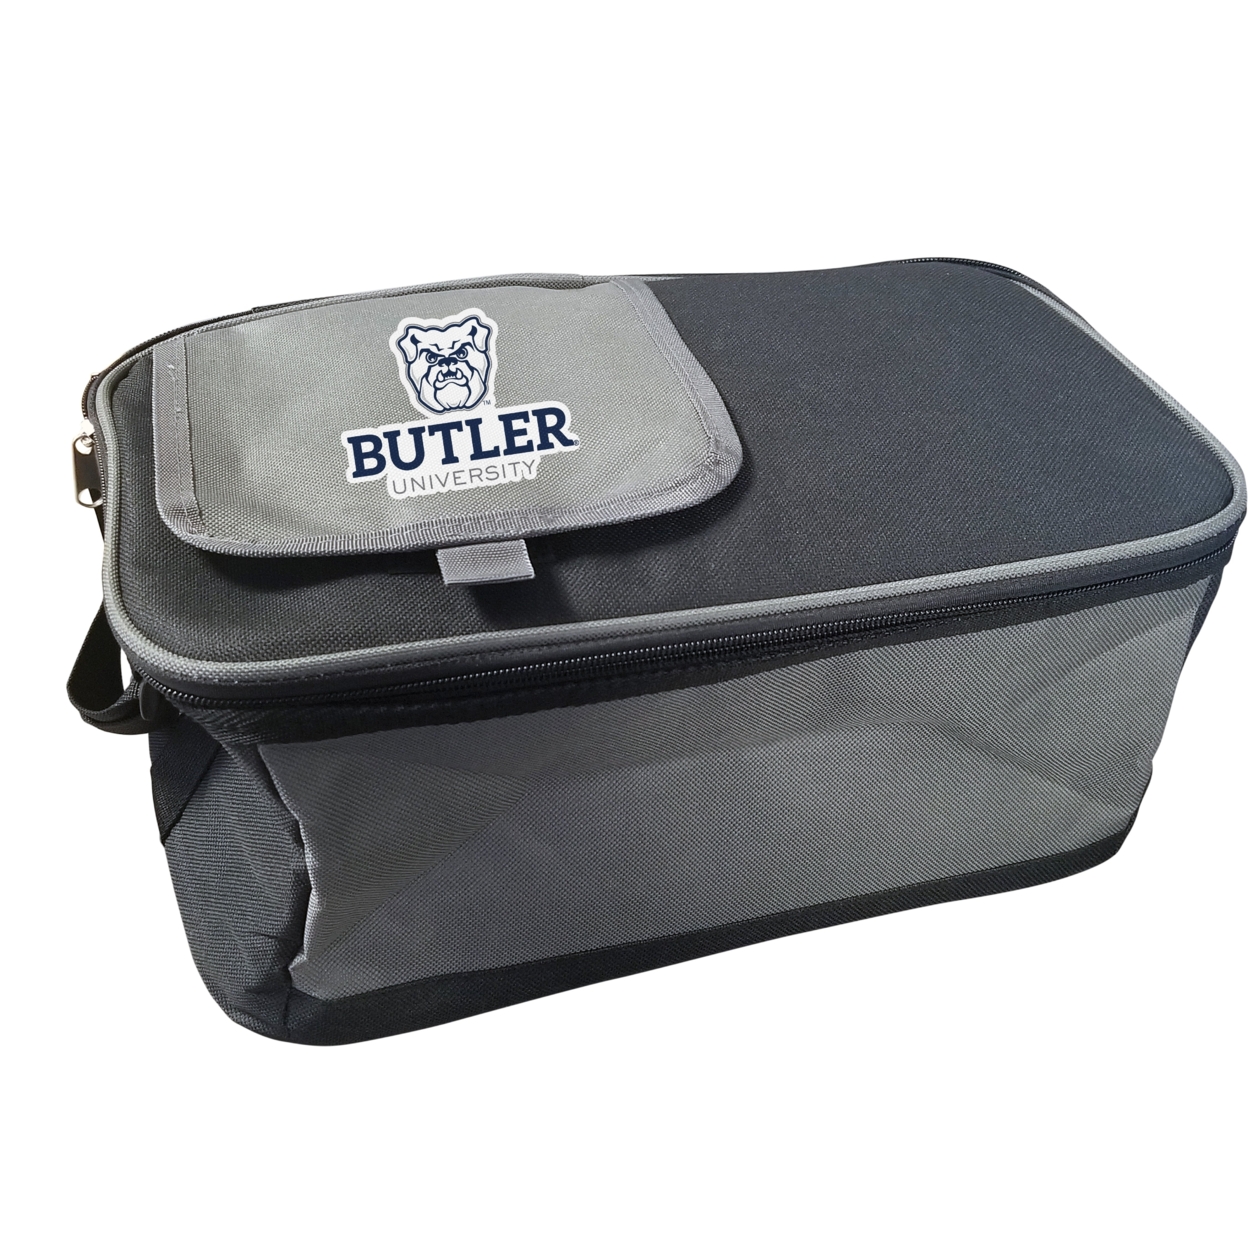 Butler Bulldogs 9 Pack Cooler